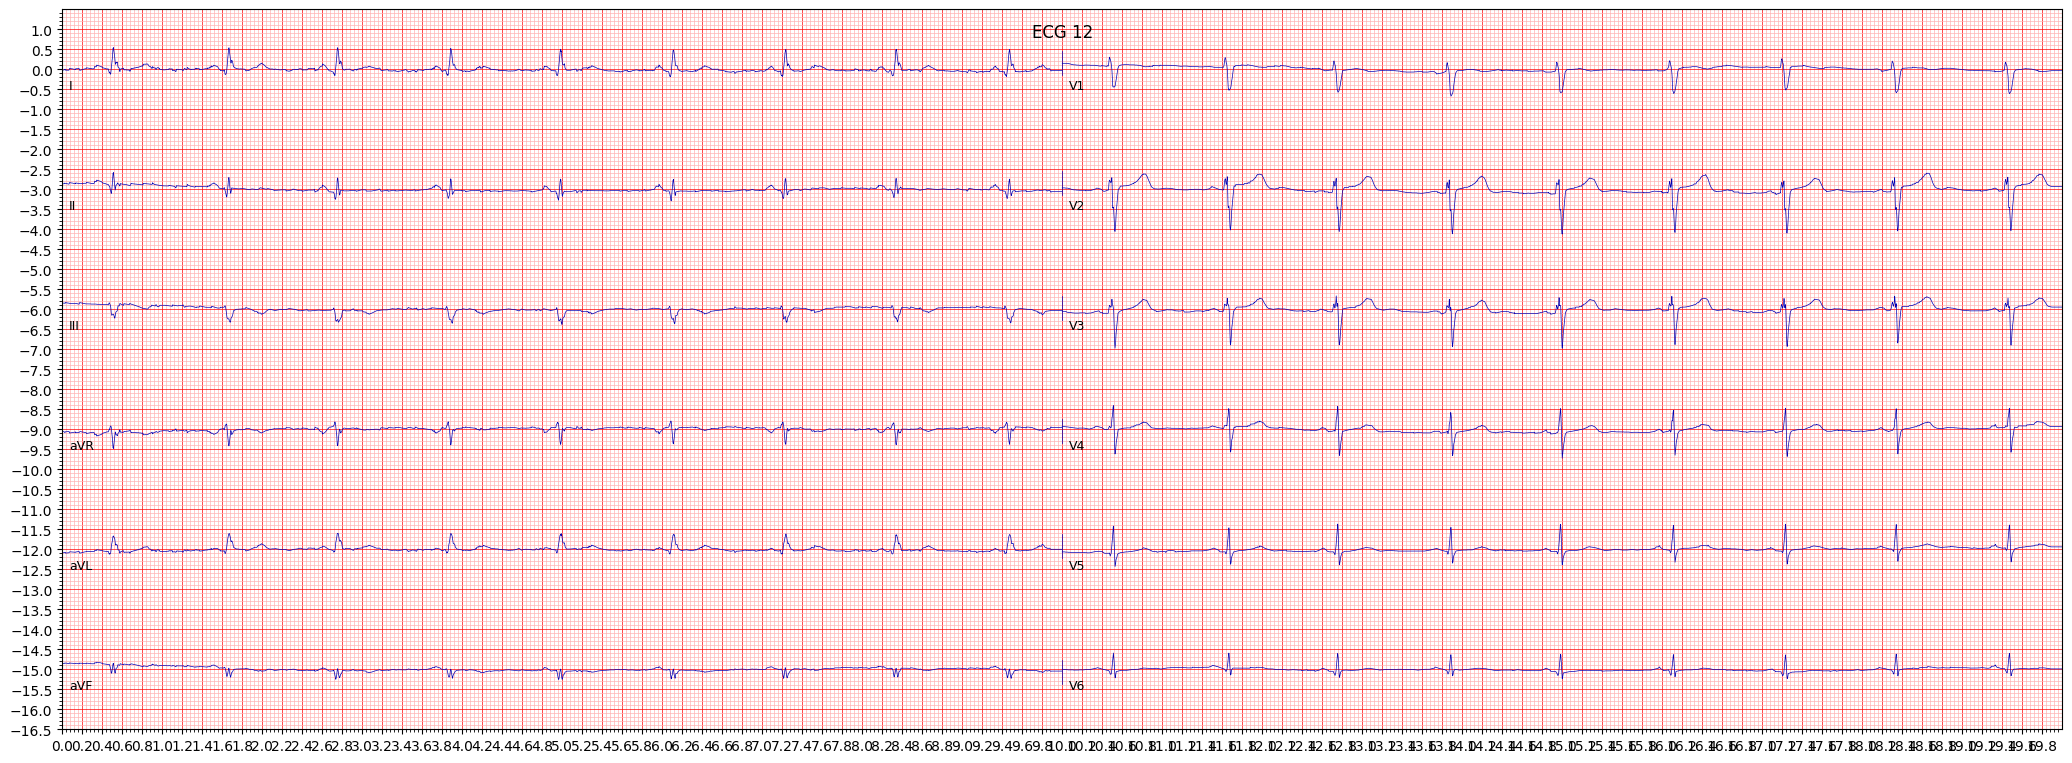 inferolateral myocardial infarction (ILMI) example 2118